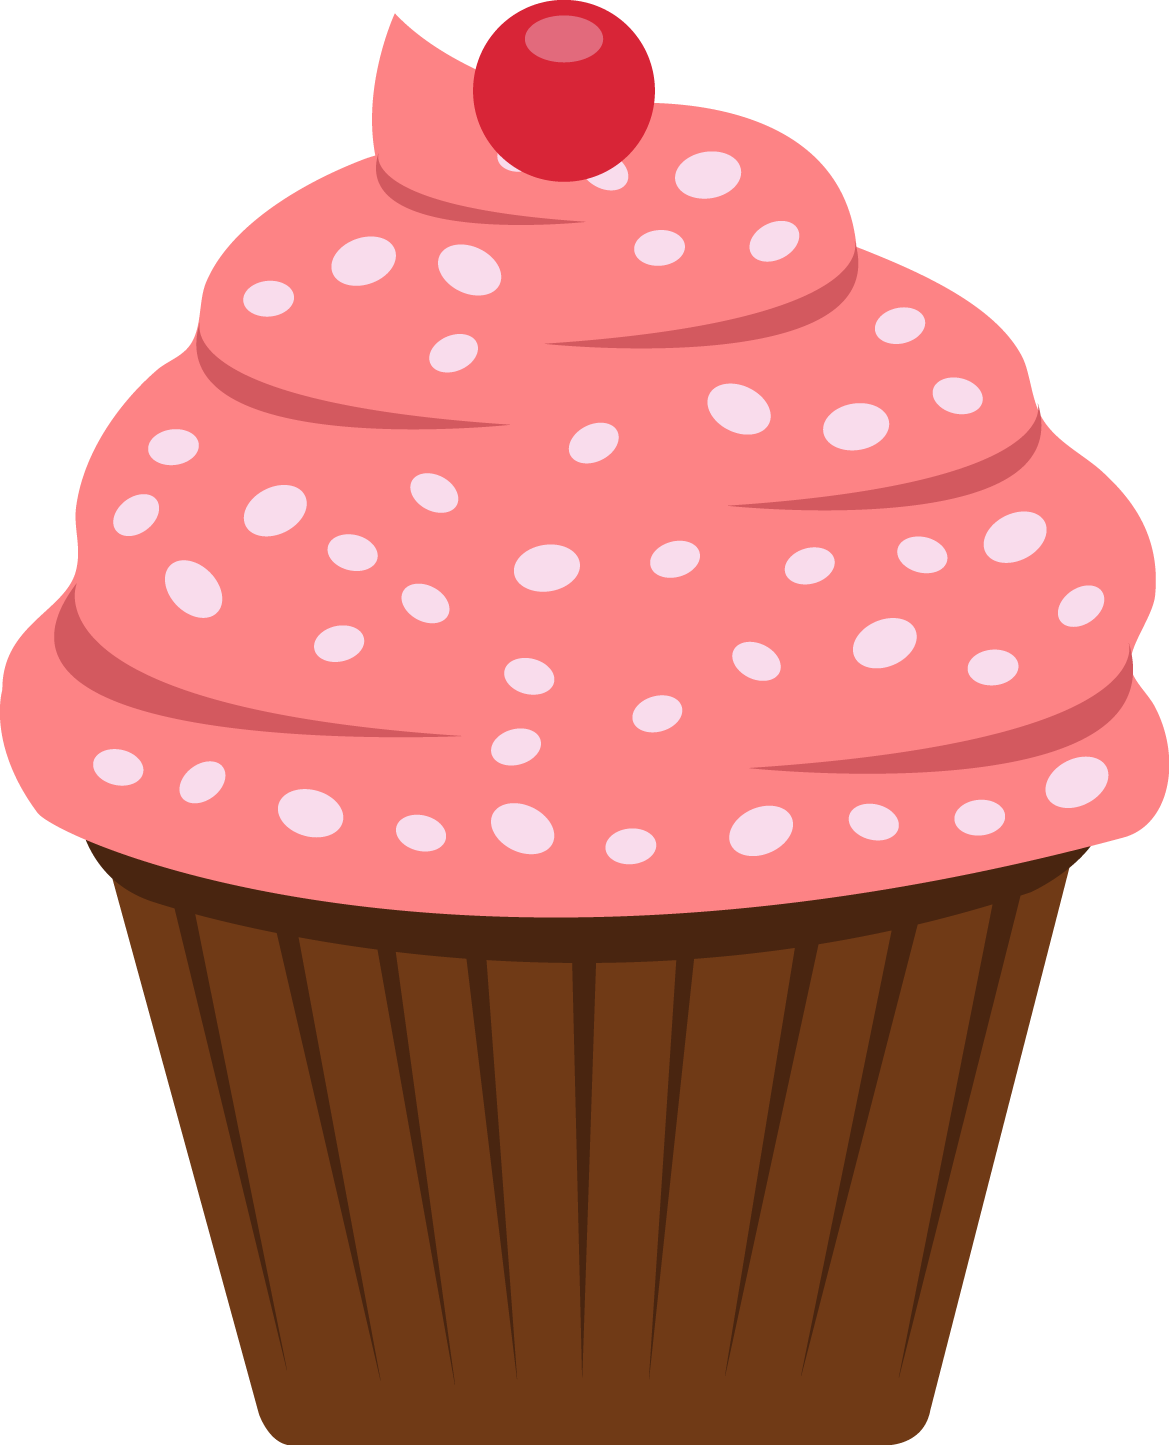 Watermelon clipart cupcake. Pin by rhonda fogle